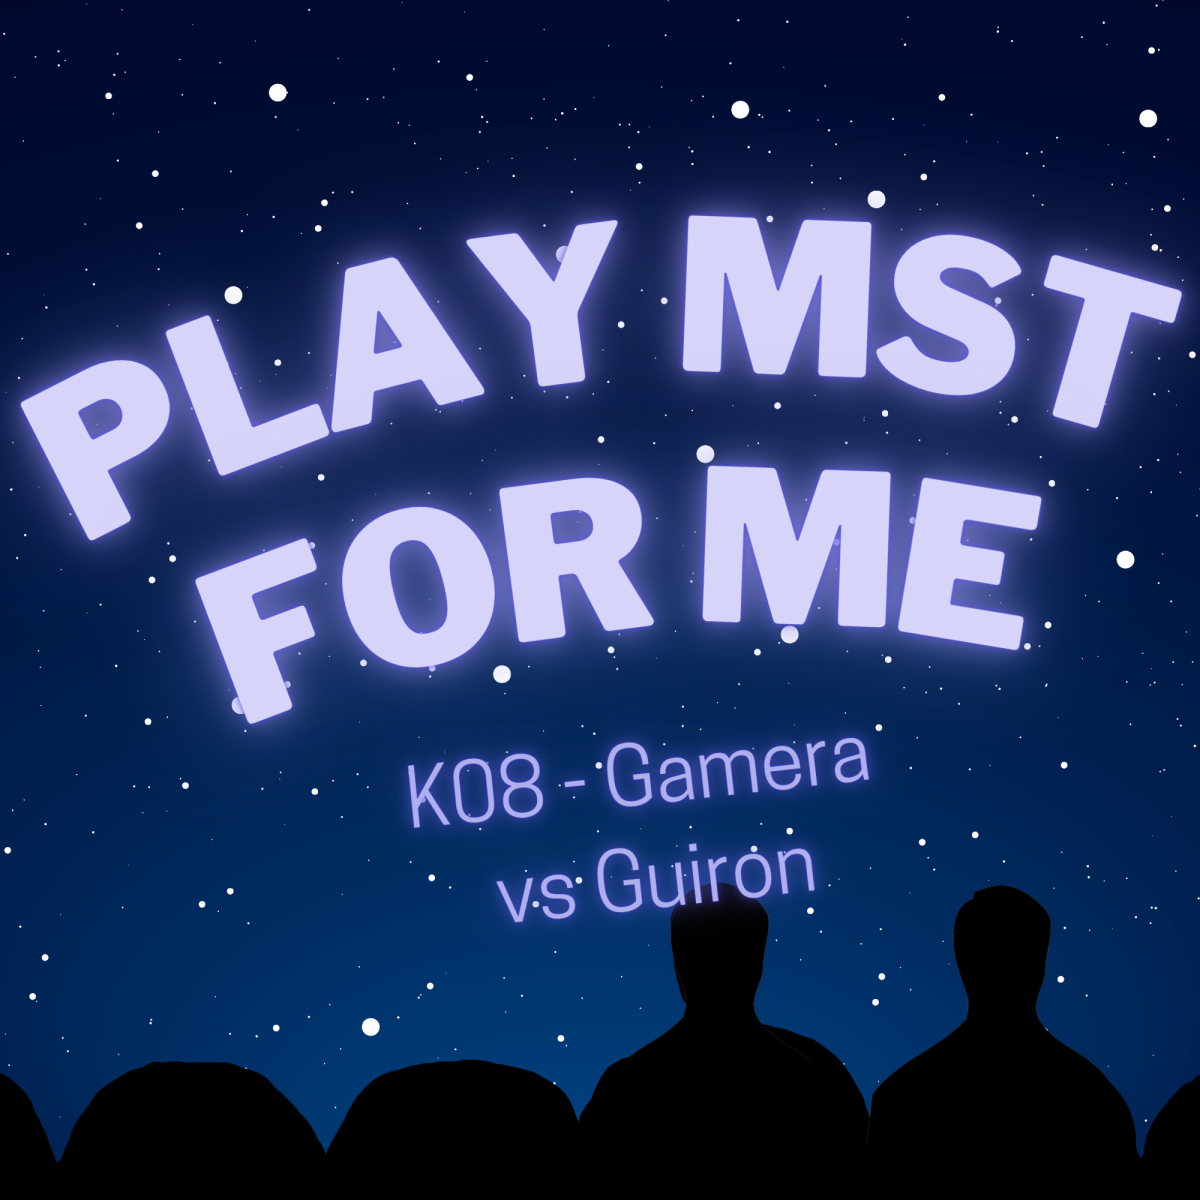 Play MST for Me #8: K08-Gamera vs Guiron